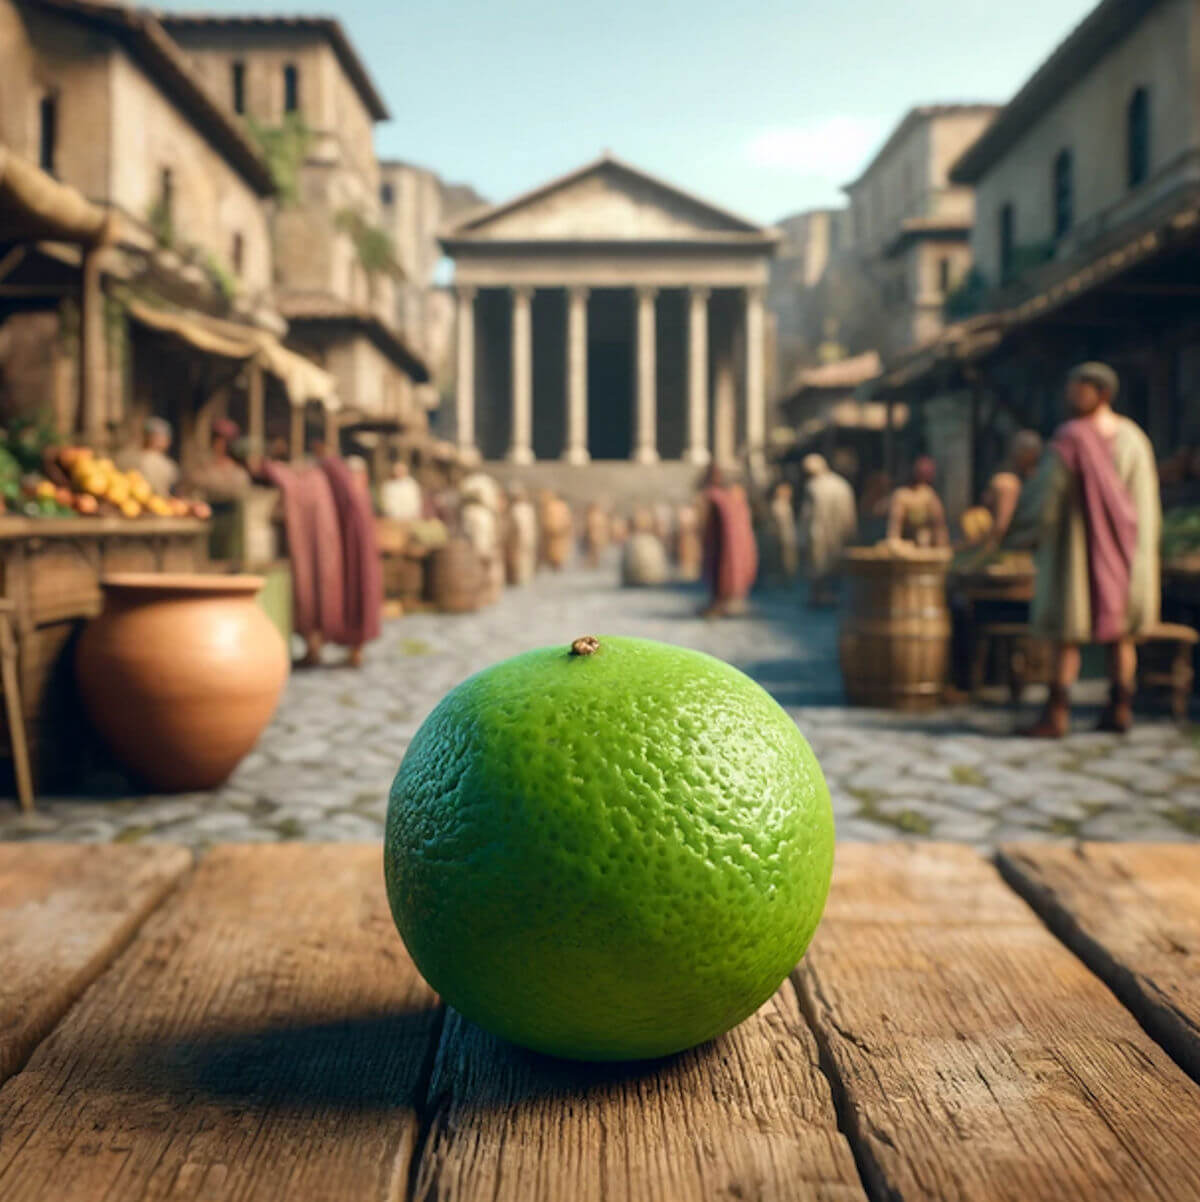 A single lime in a Roman market